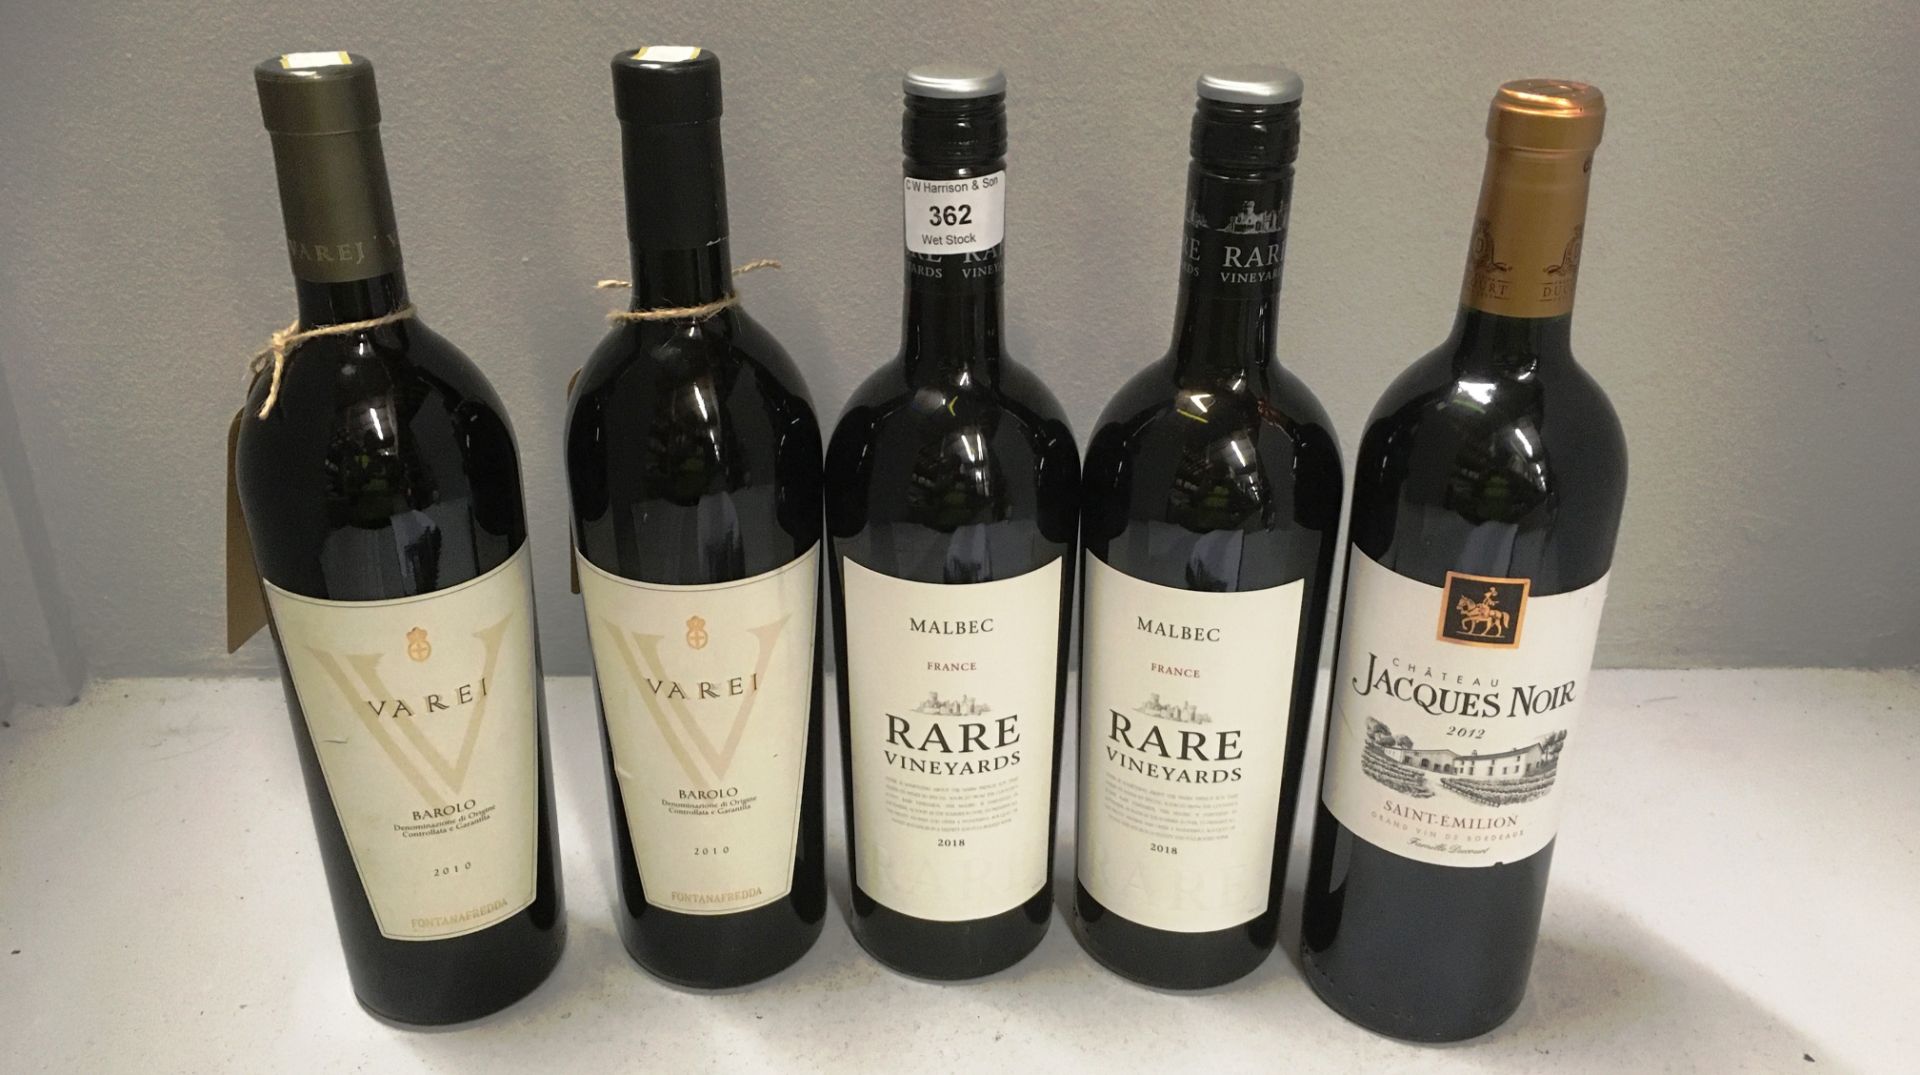 5 x items - 2 x 75cl bottles of Varej Barolo 2010 red wine,